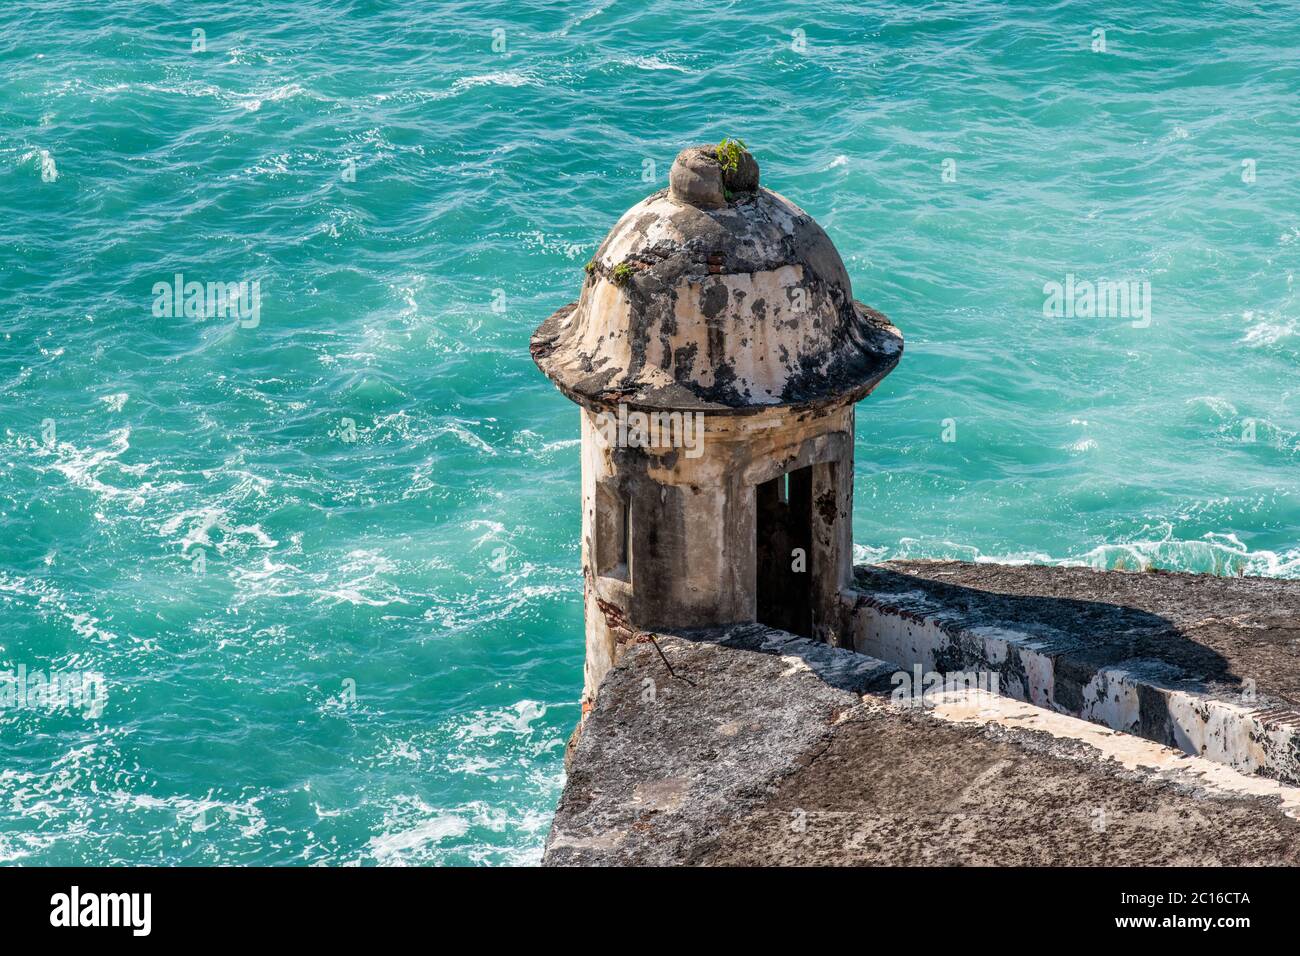 Stunning sentry box (garita) with turquoise Caribbean waters in San Juan, Puerto Rico. Stock Photo